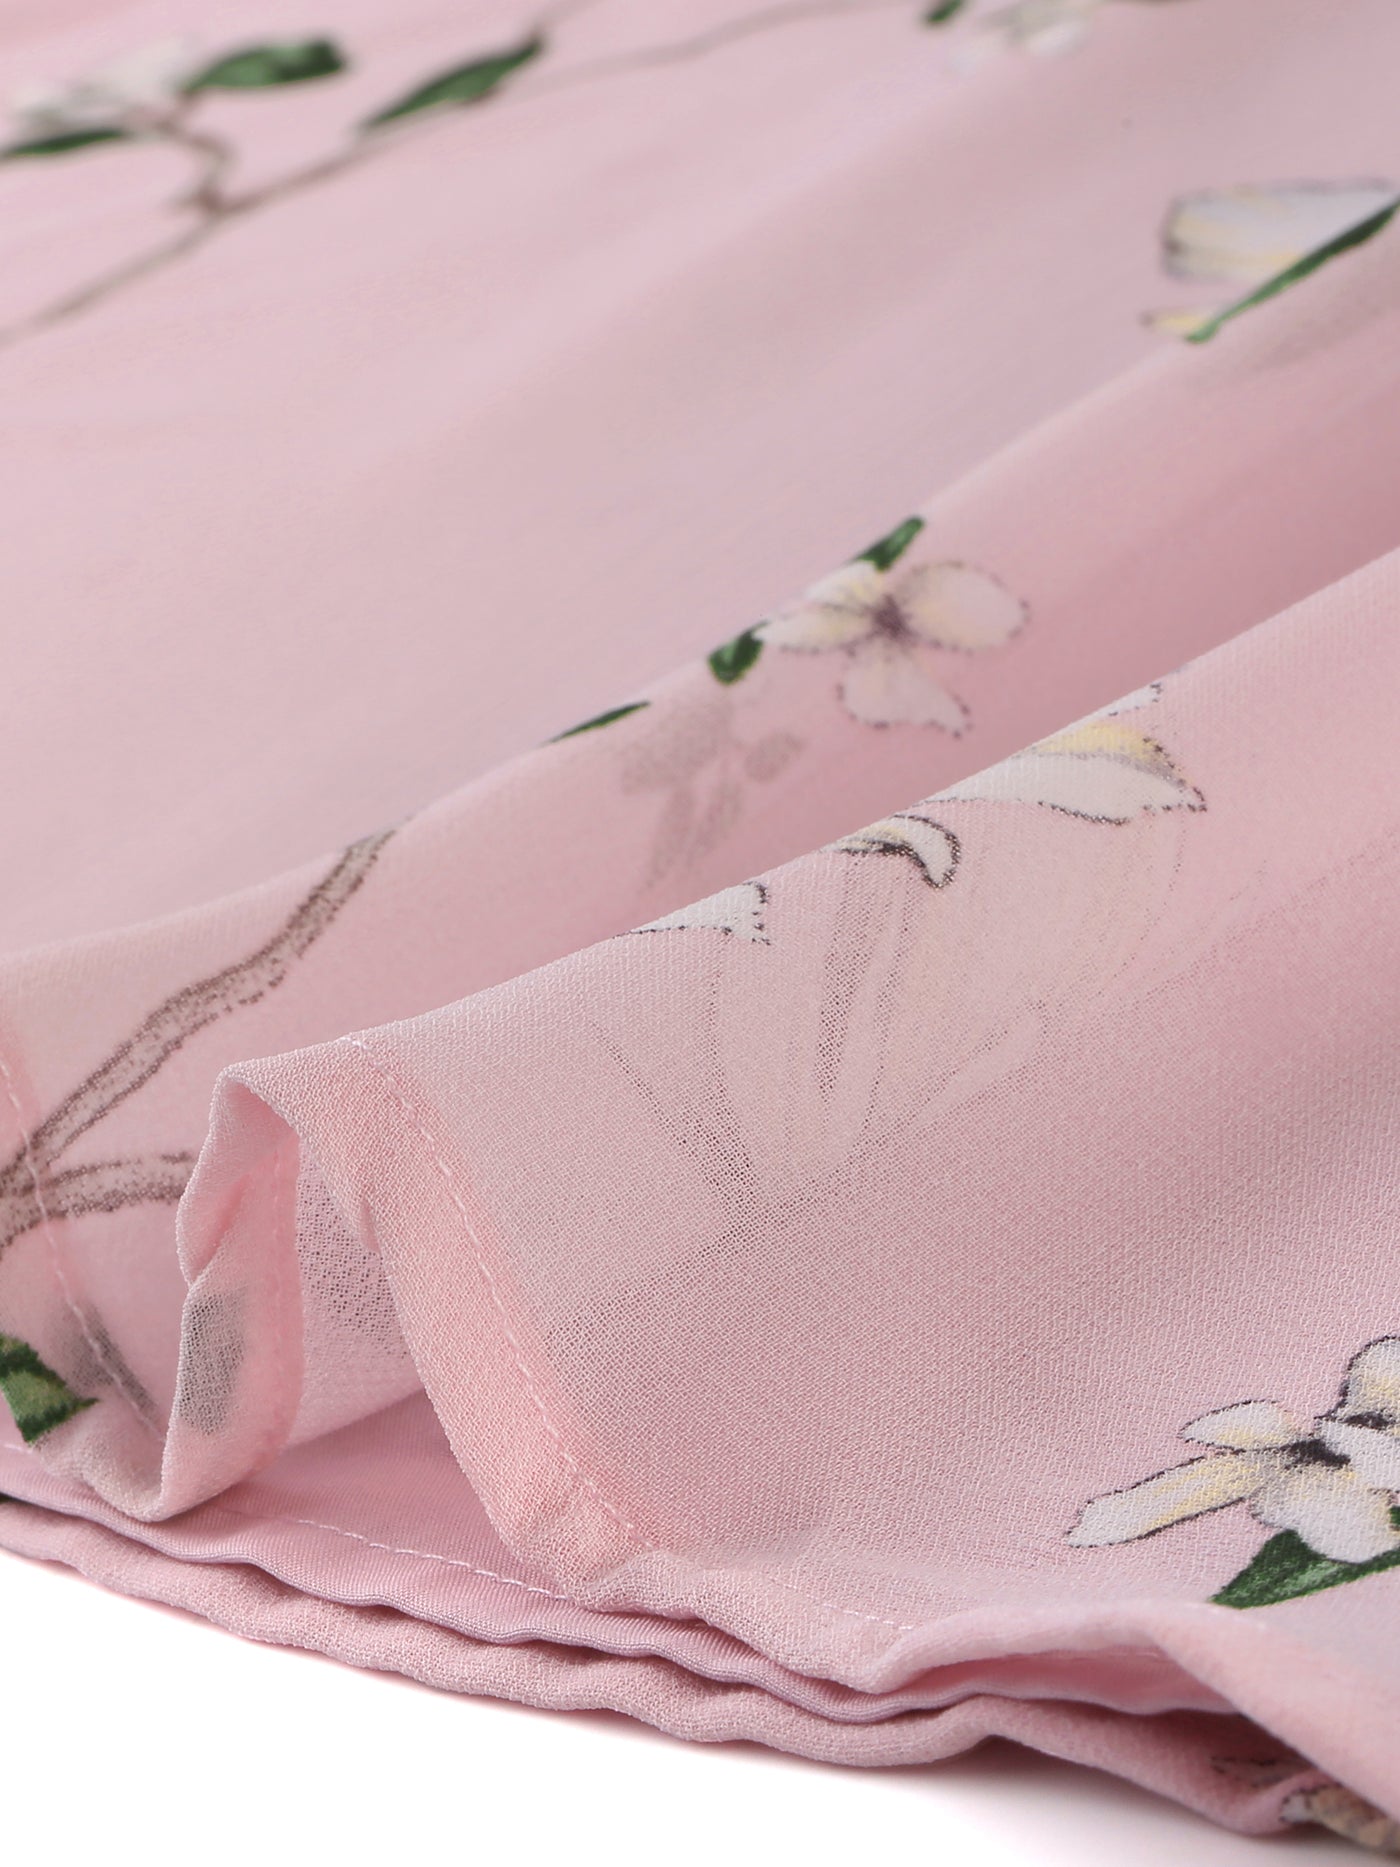 Allegra K Floral Print A-line V Neck Long Sleeve Chiffon Belted Mini Dress